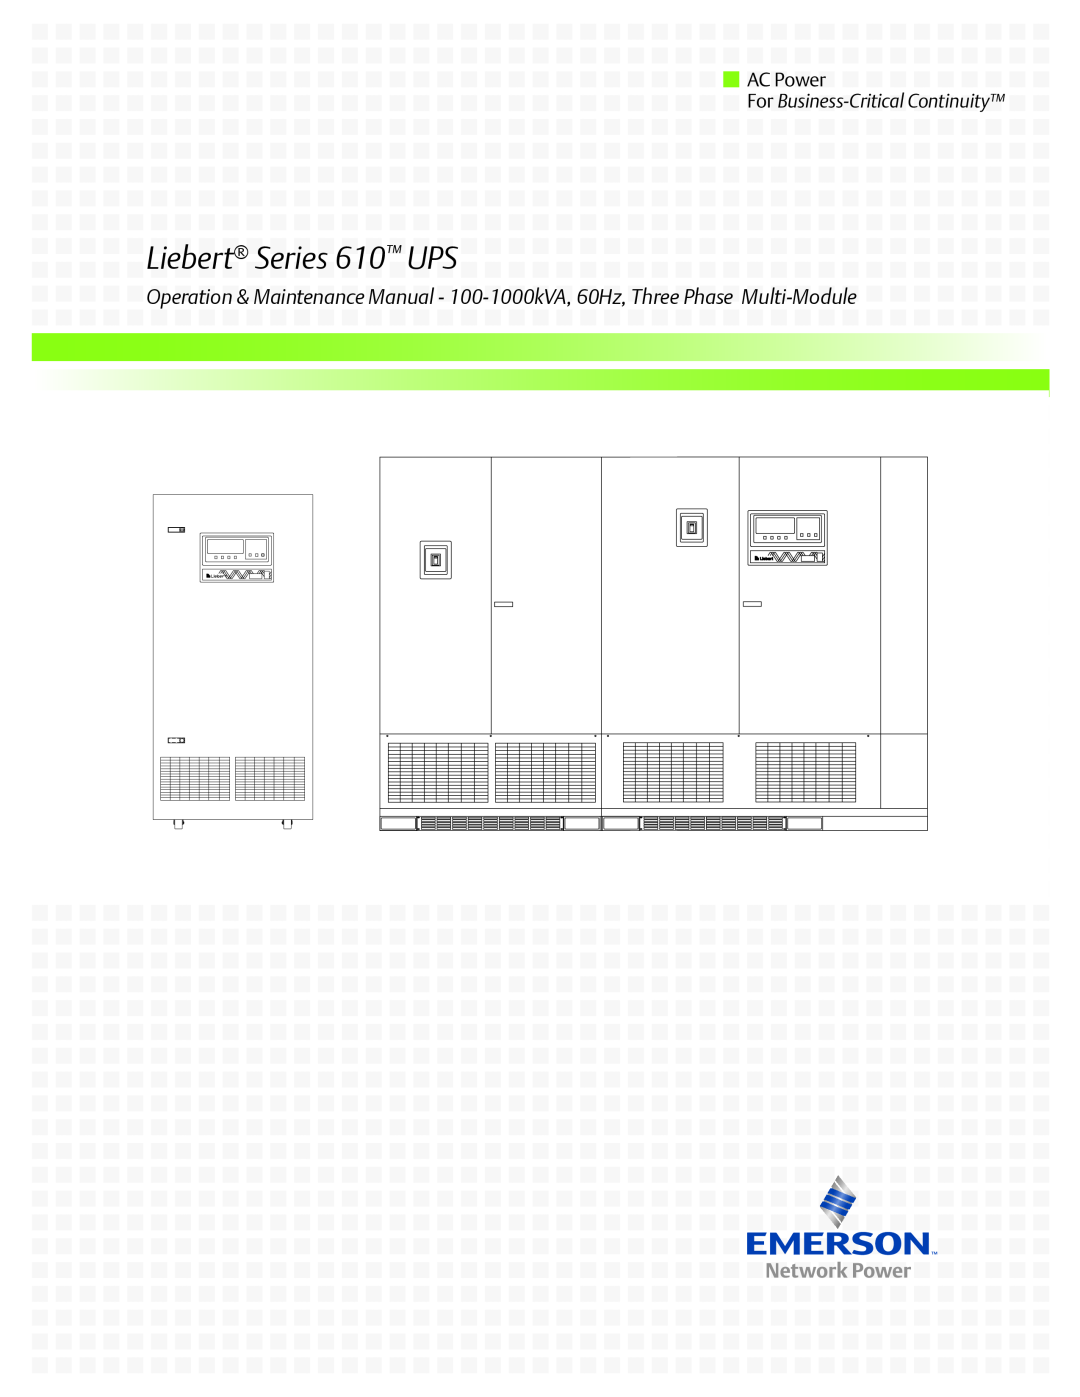 Emerson manual Liebert Series 610 UPS, AC Power, For Business-Critical Continuity 